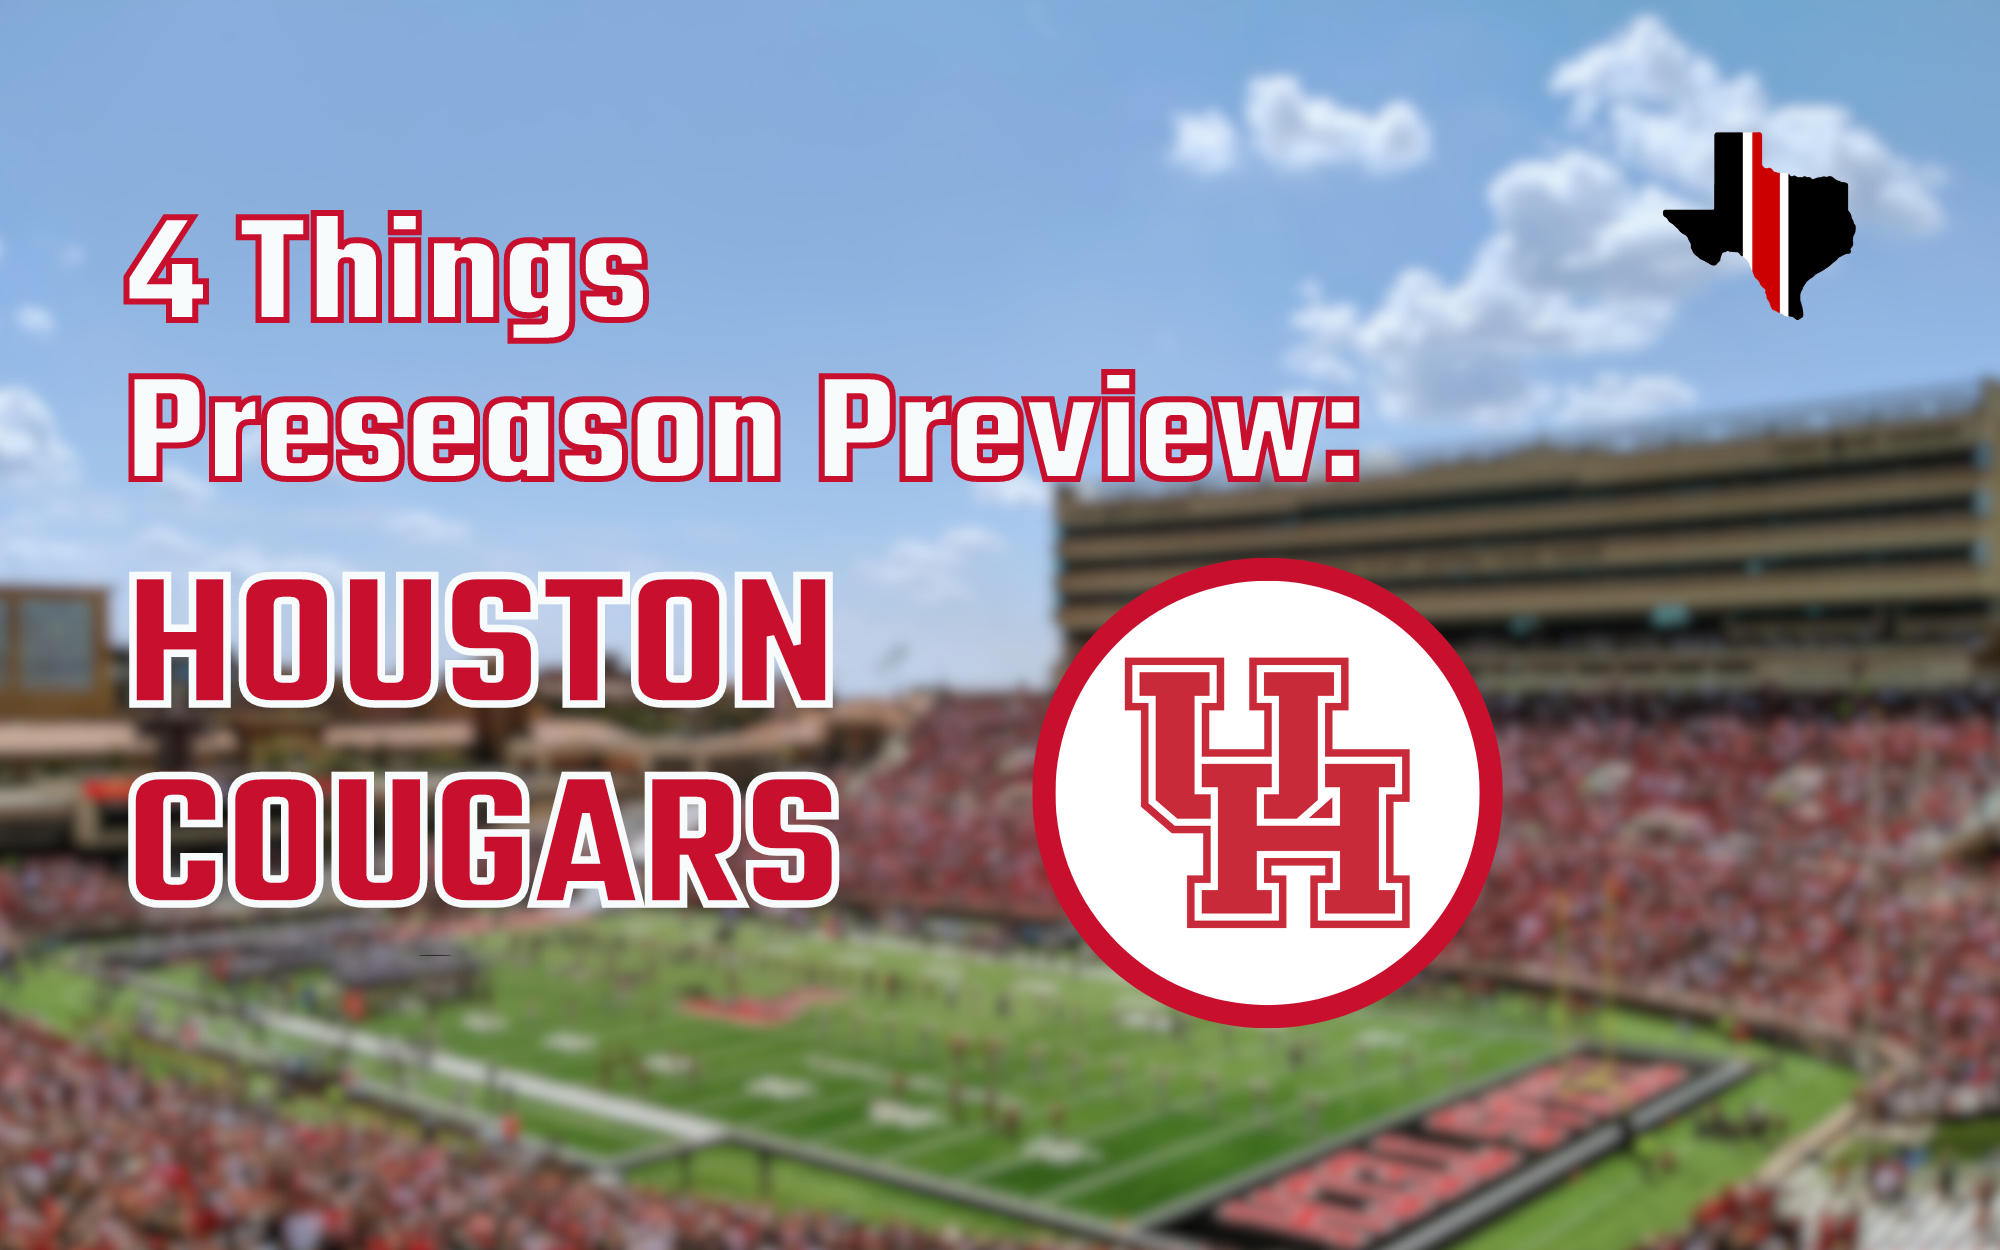 4 Things Preseason Preview: Houston Cougars